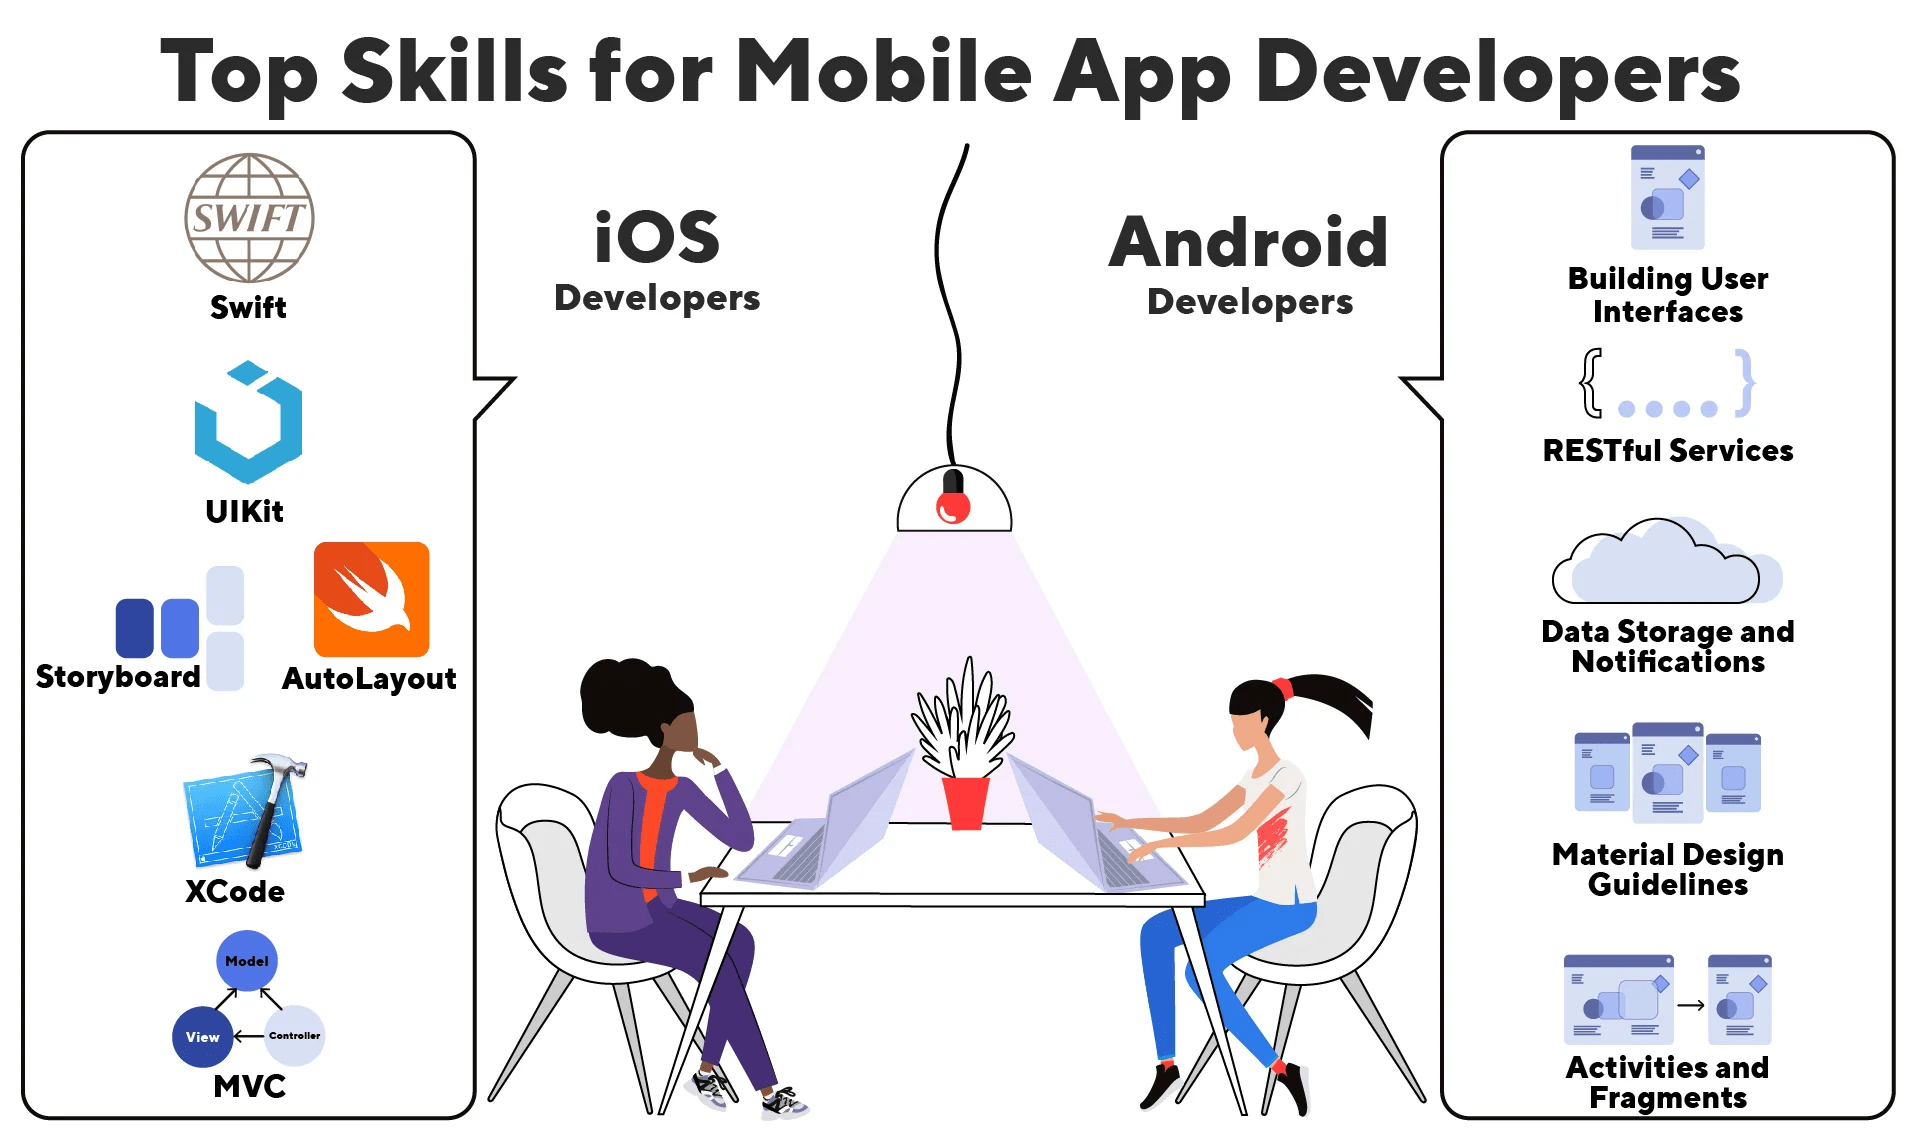 Image showing skills needed in mobile app development